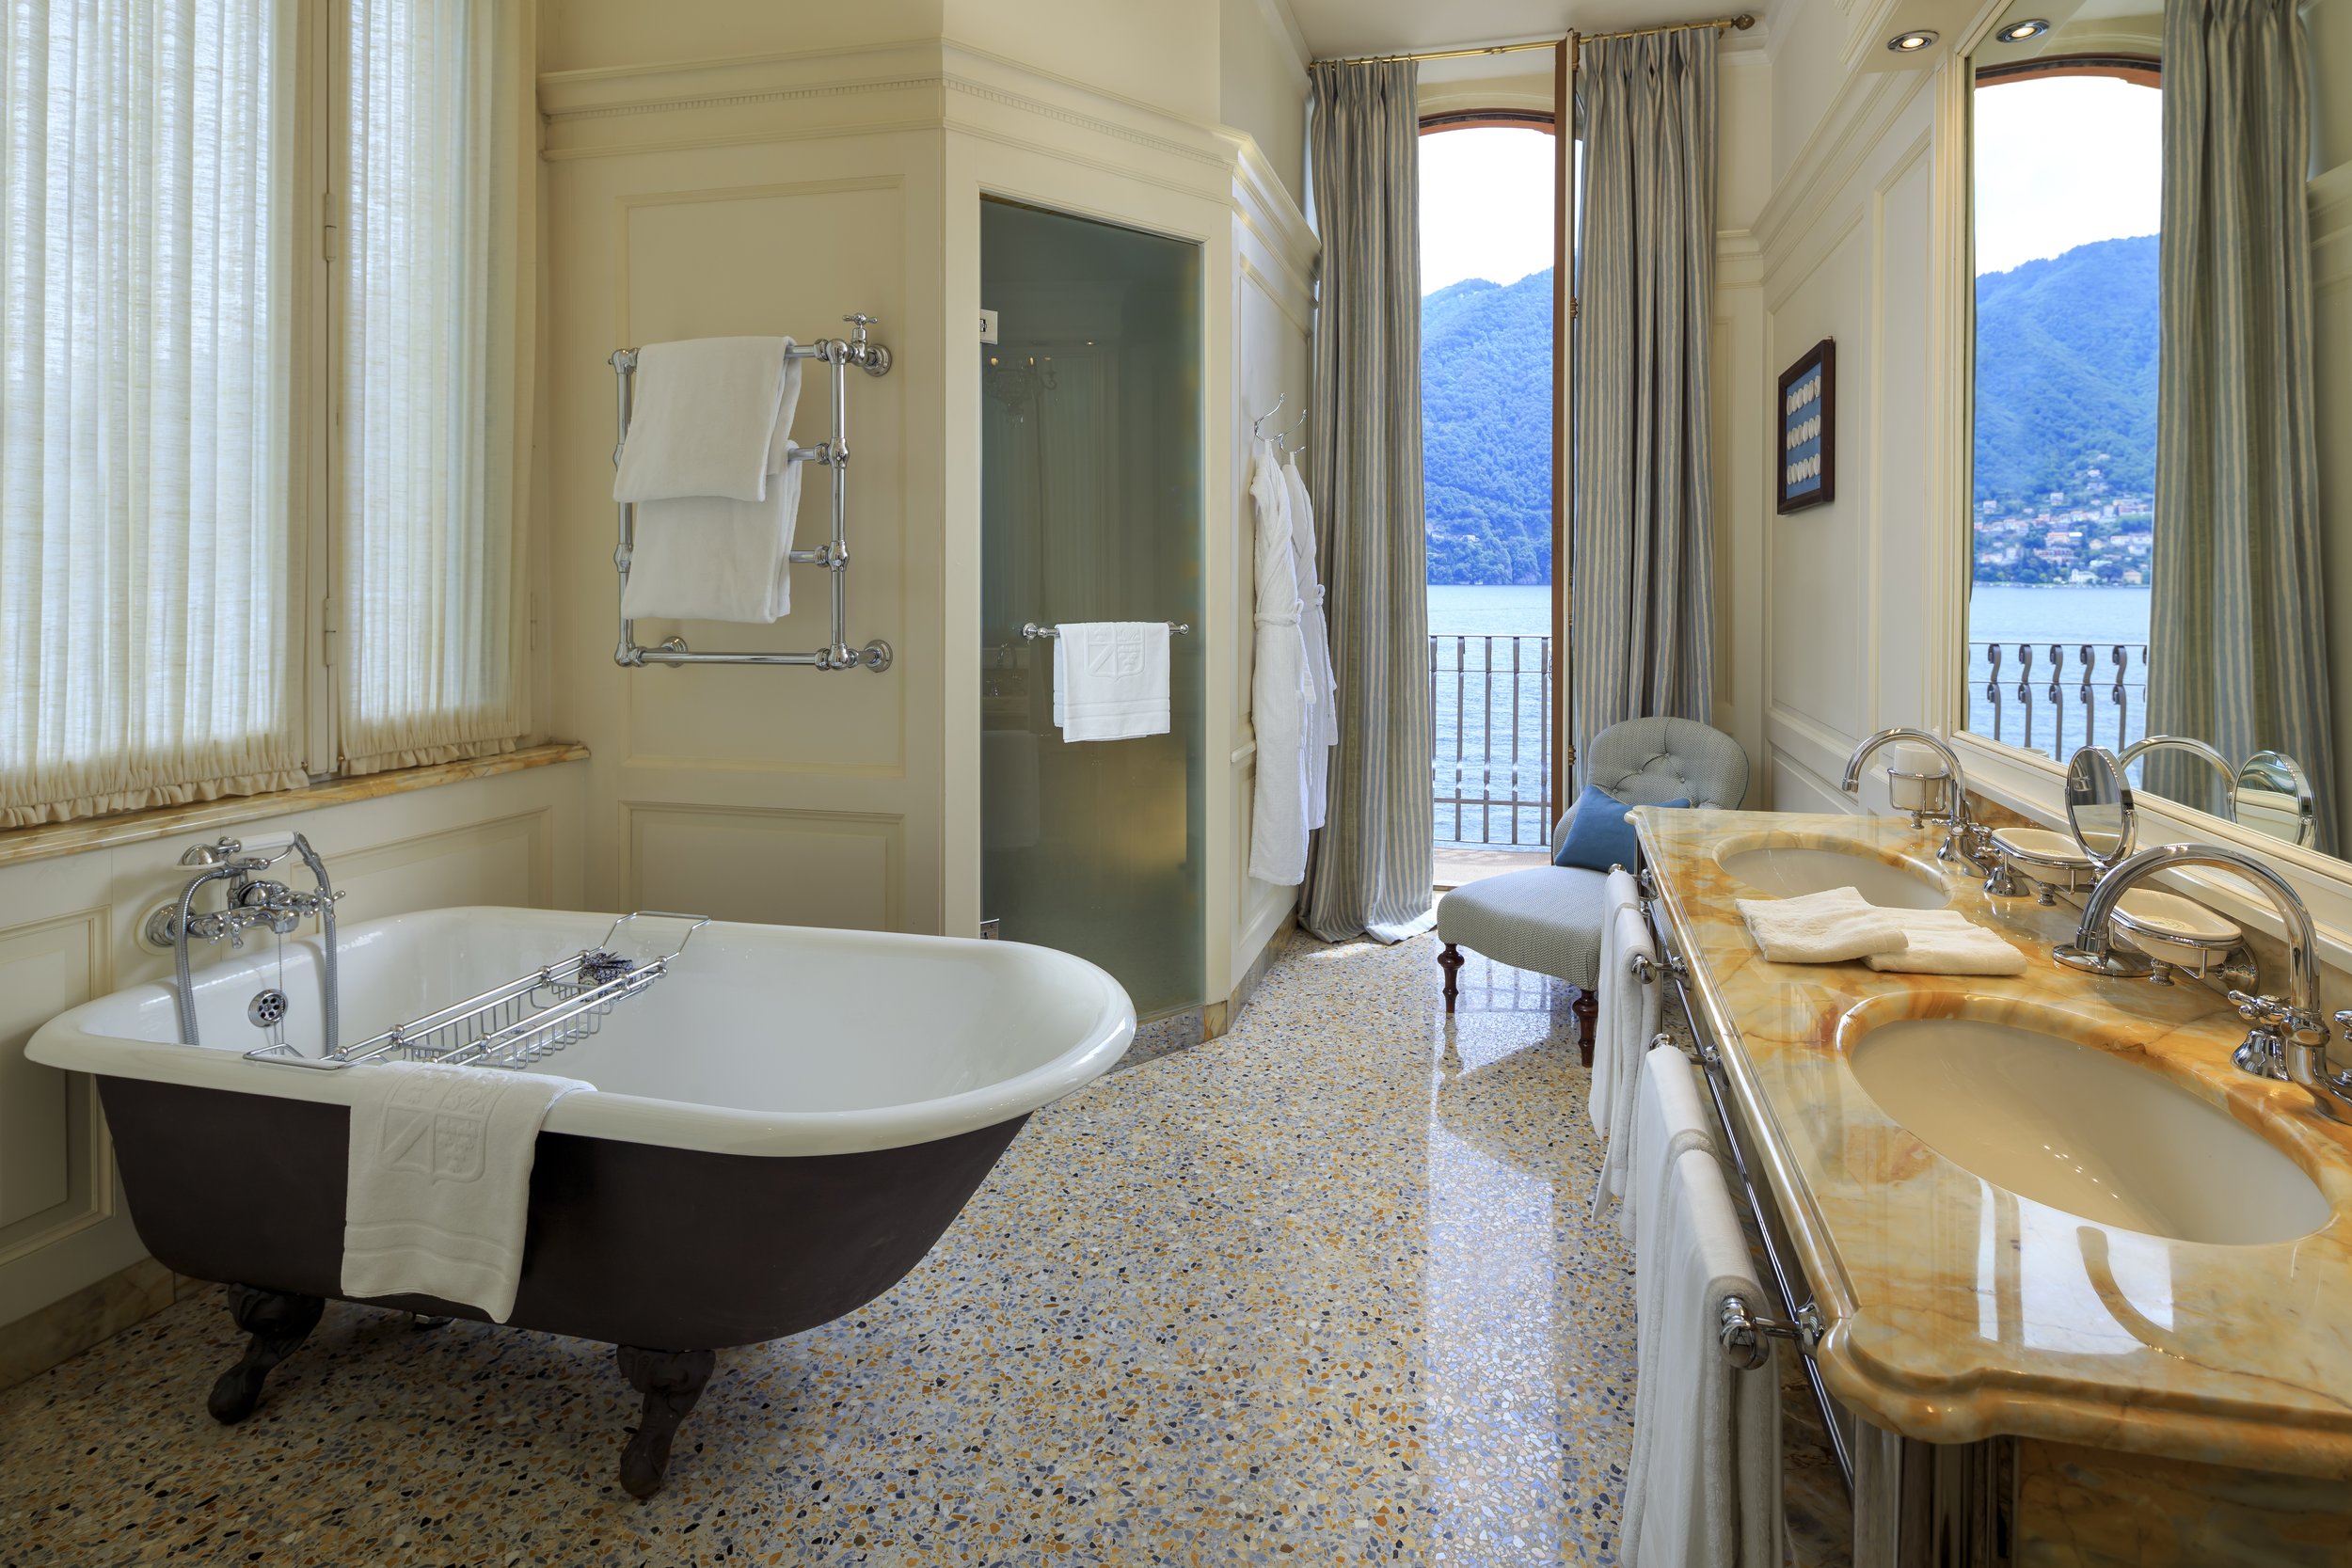 Francis York Waterfront Lake Como Villa Available as a Luxury Holiday Rental 6.jpg